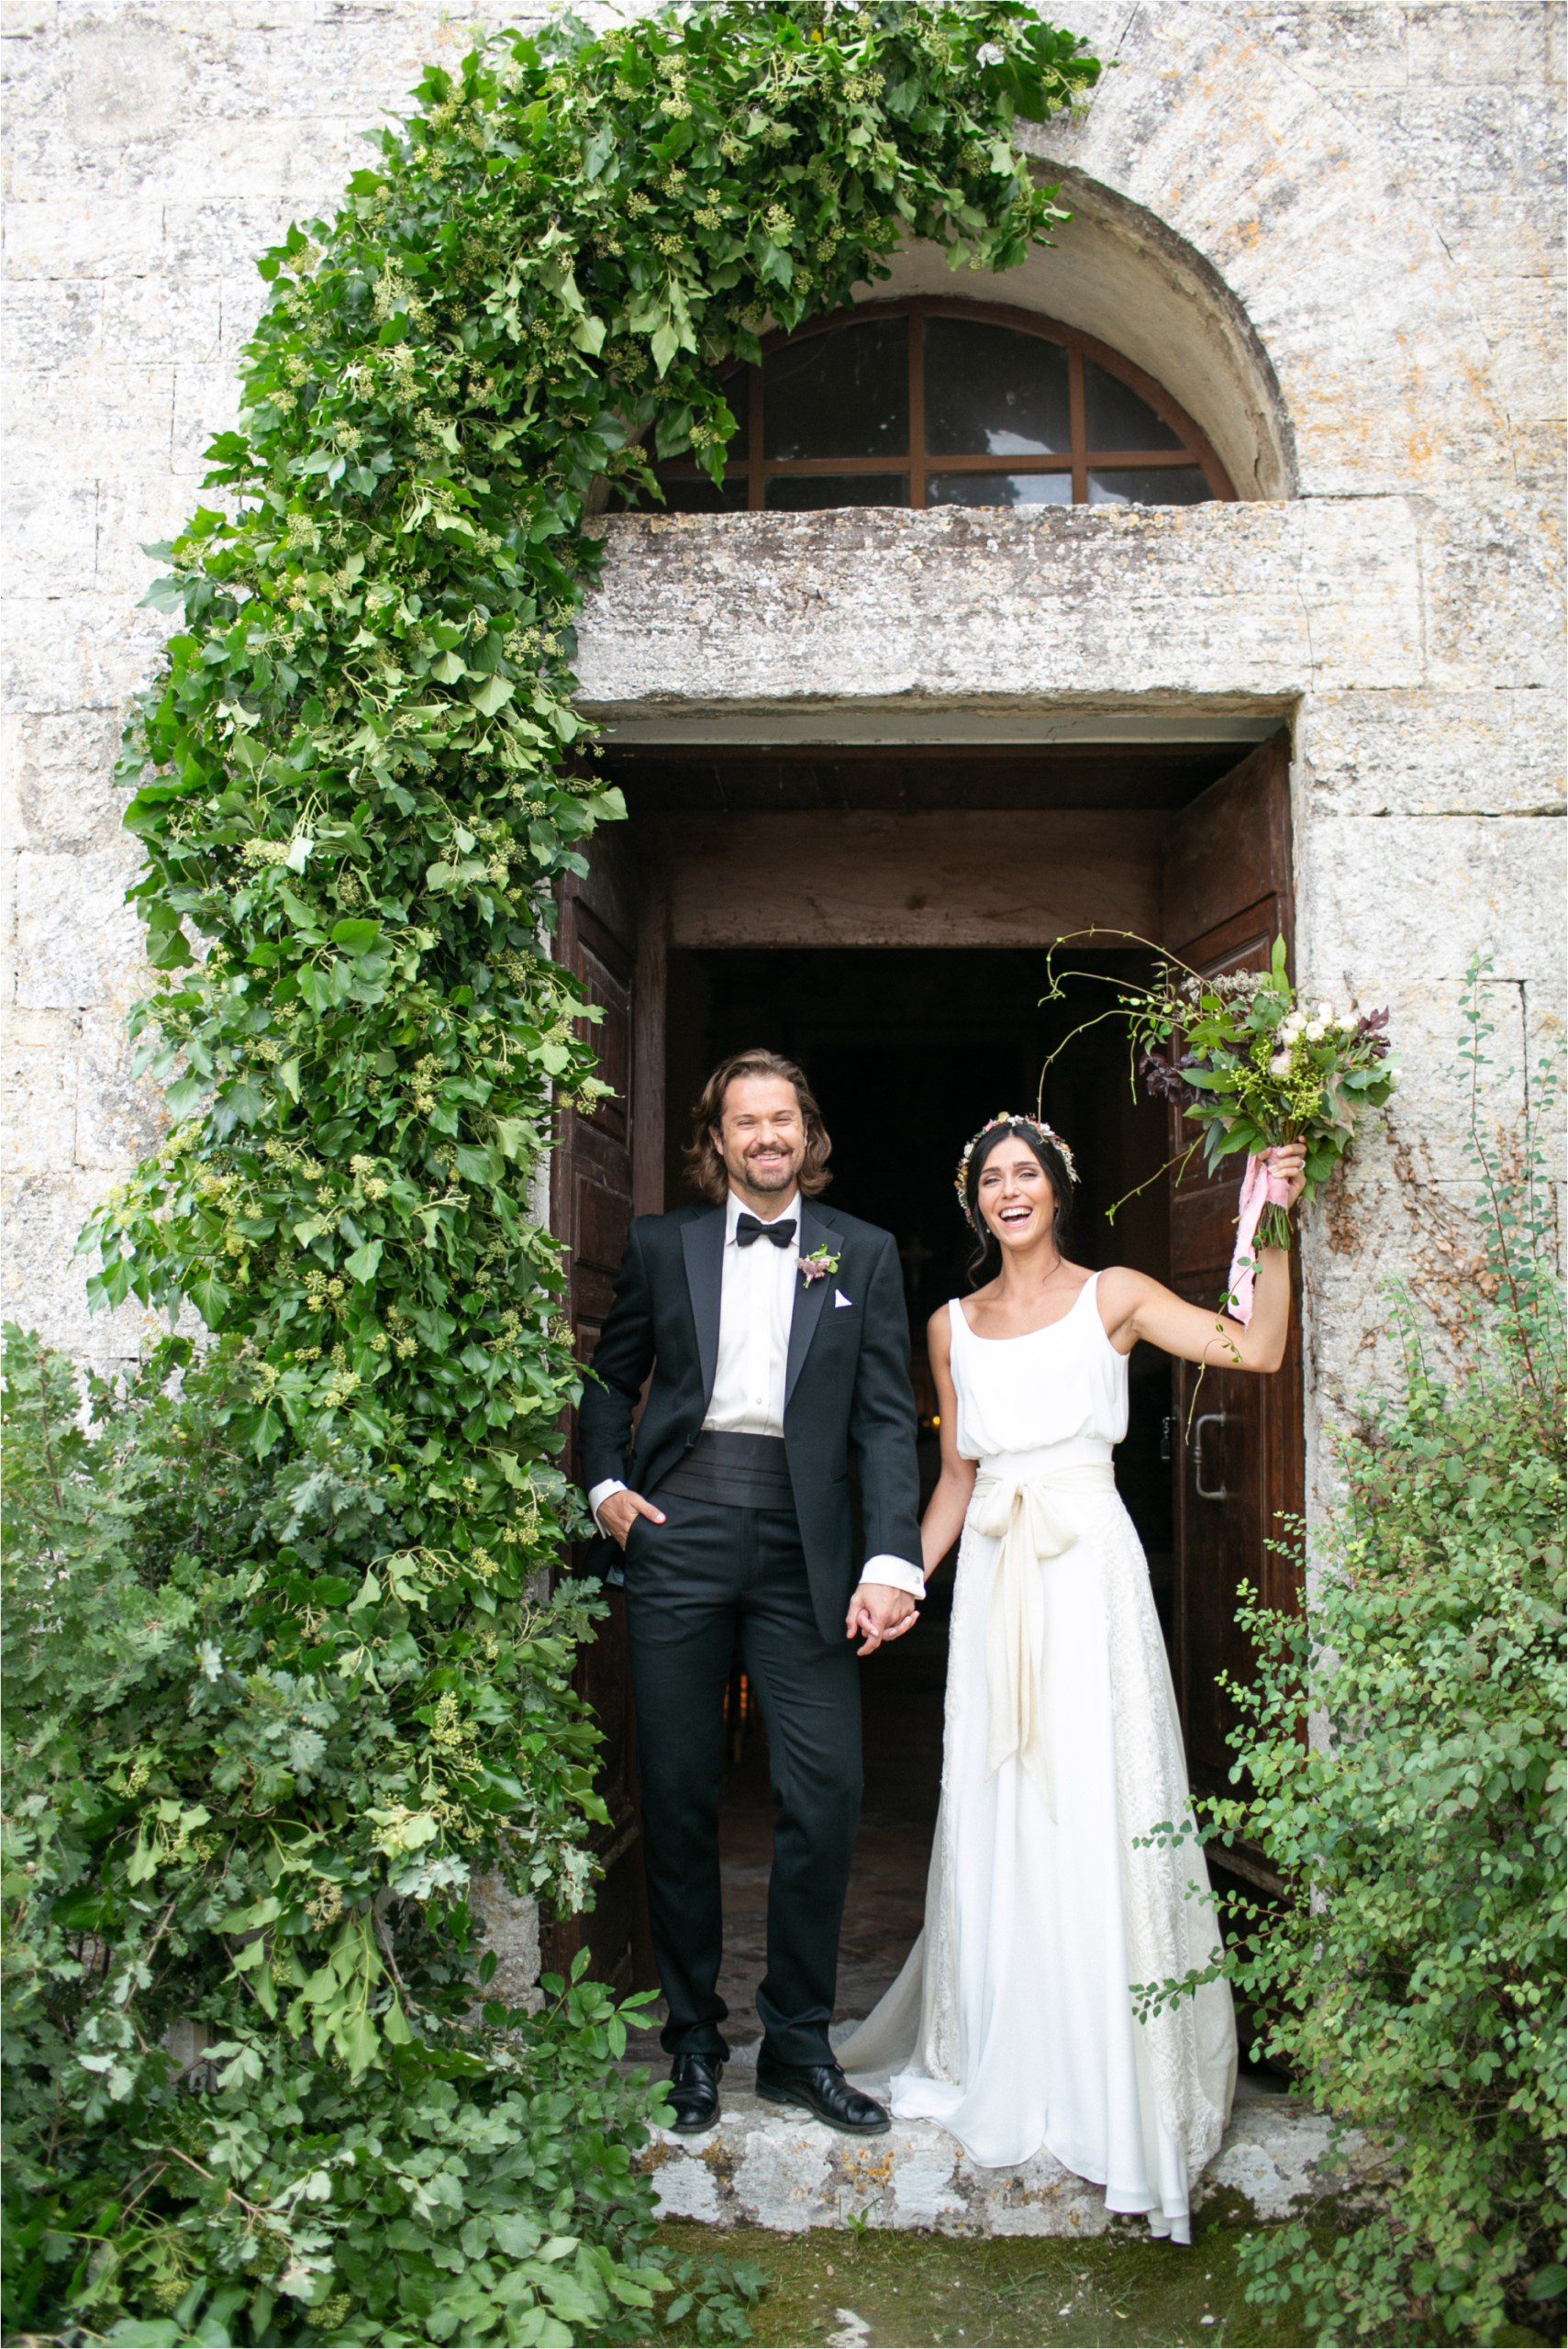 Tuscany destination wedding inspiration at Borgo Pignano